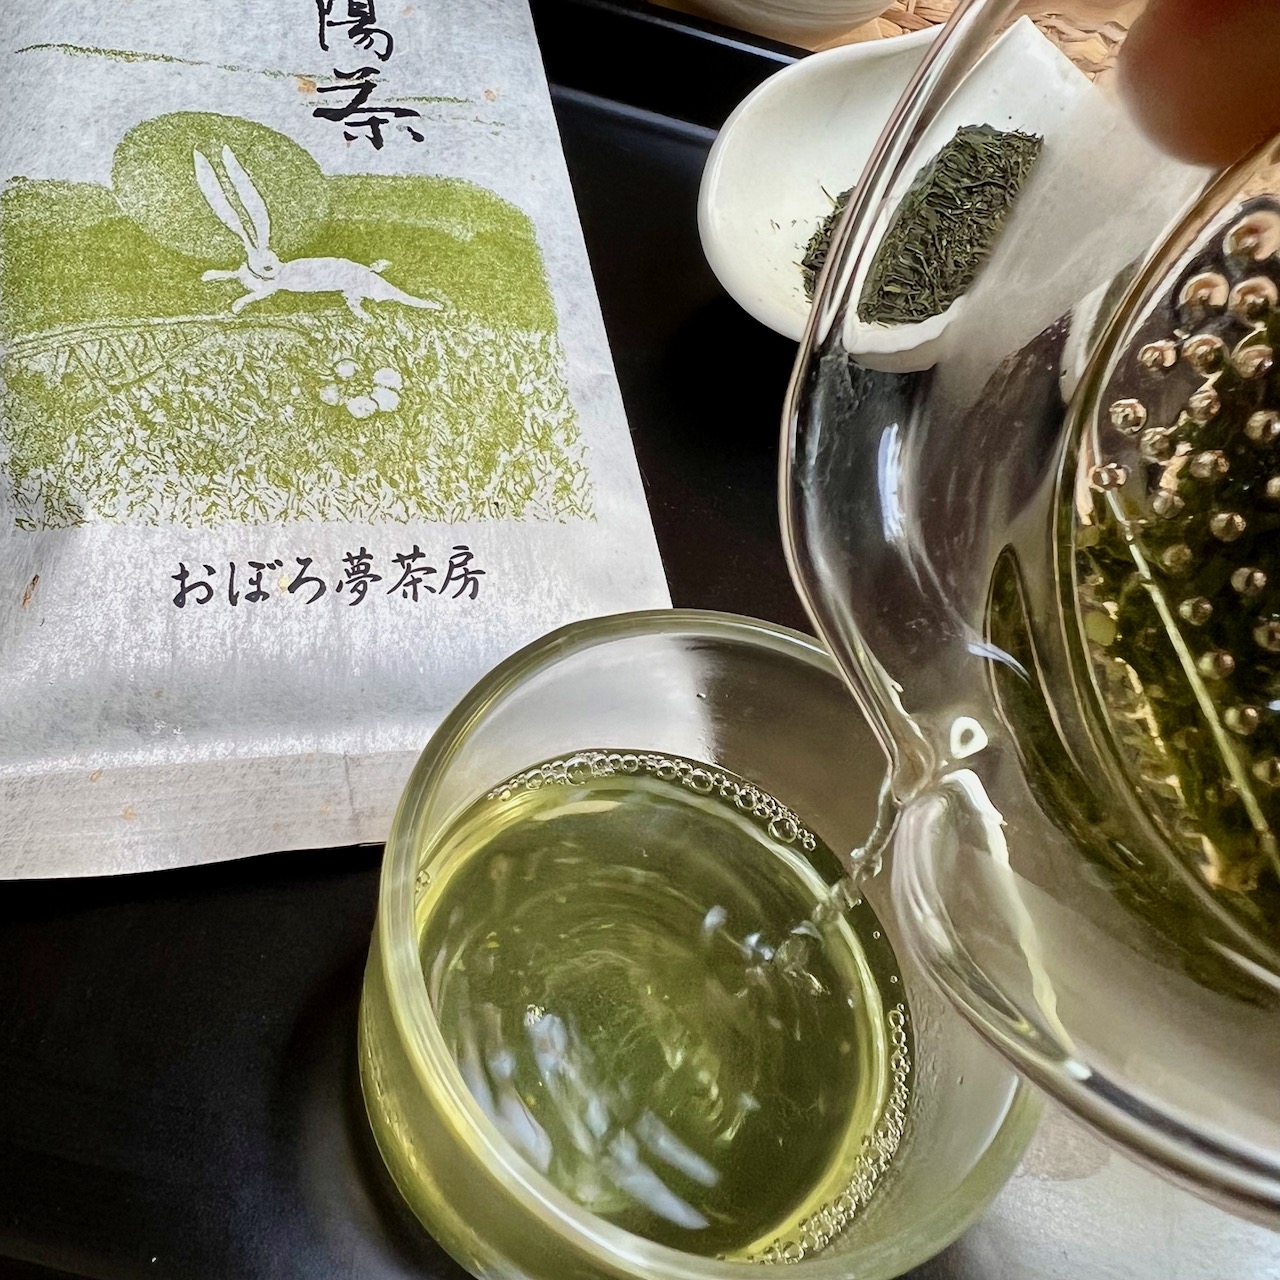 Shoujyu 松寿 matcha tea  Shop and webshop for Japanese, Chinese and  Taiwanese teas